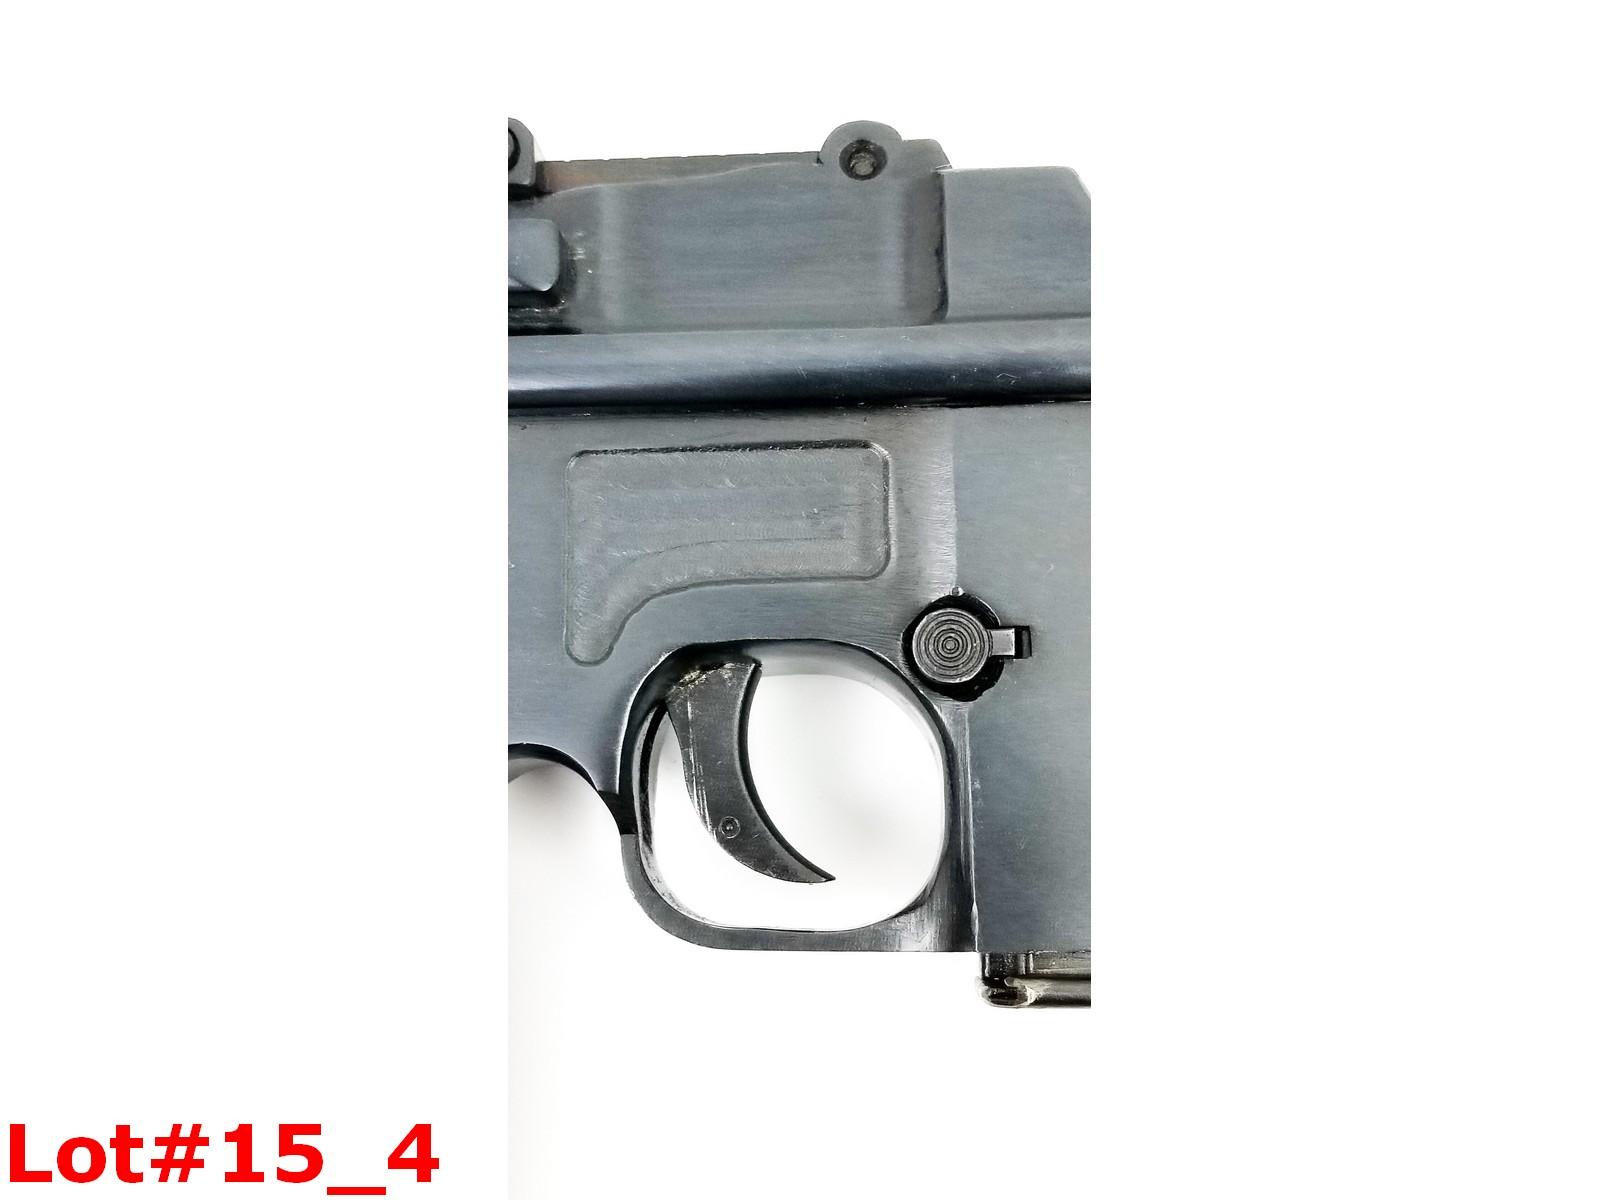 Chinese Made Broomhandle C96 9mm Pistol